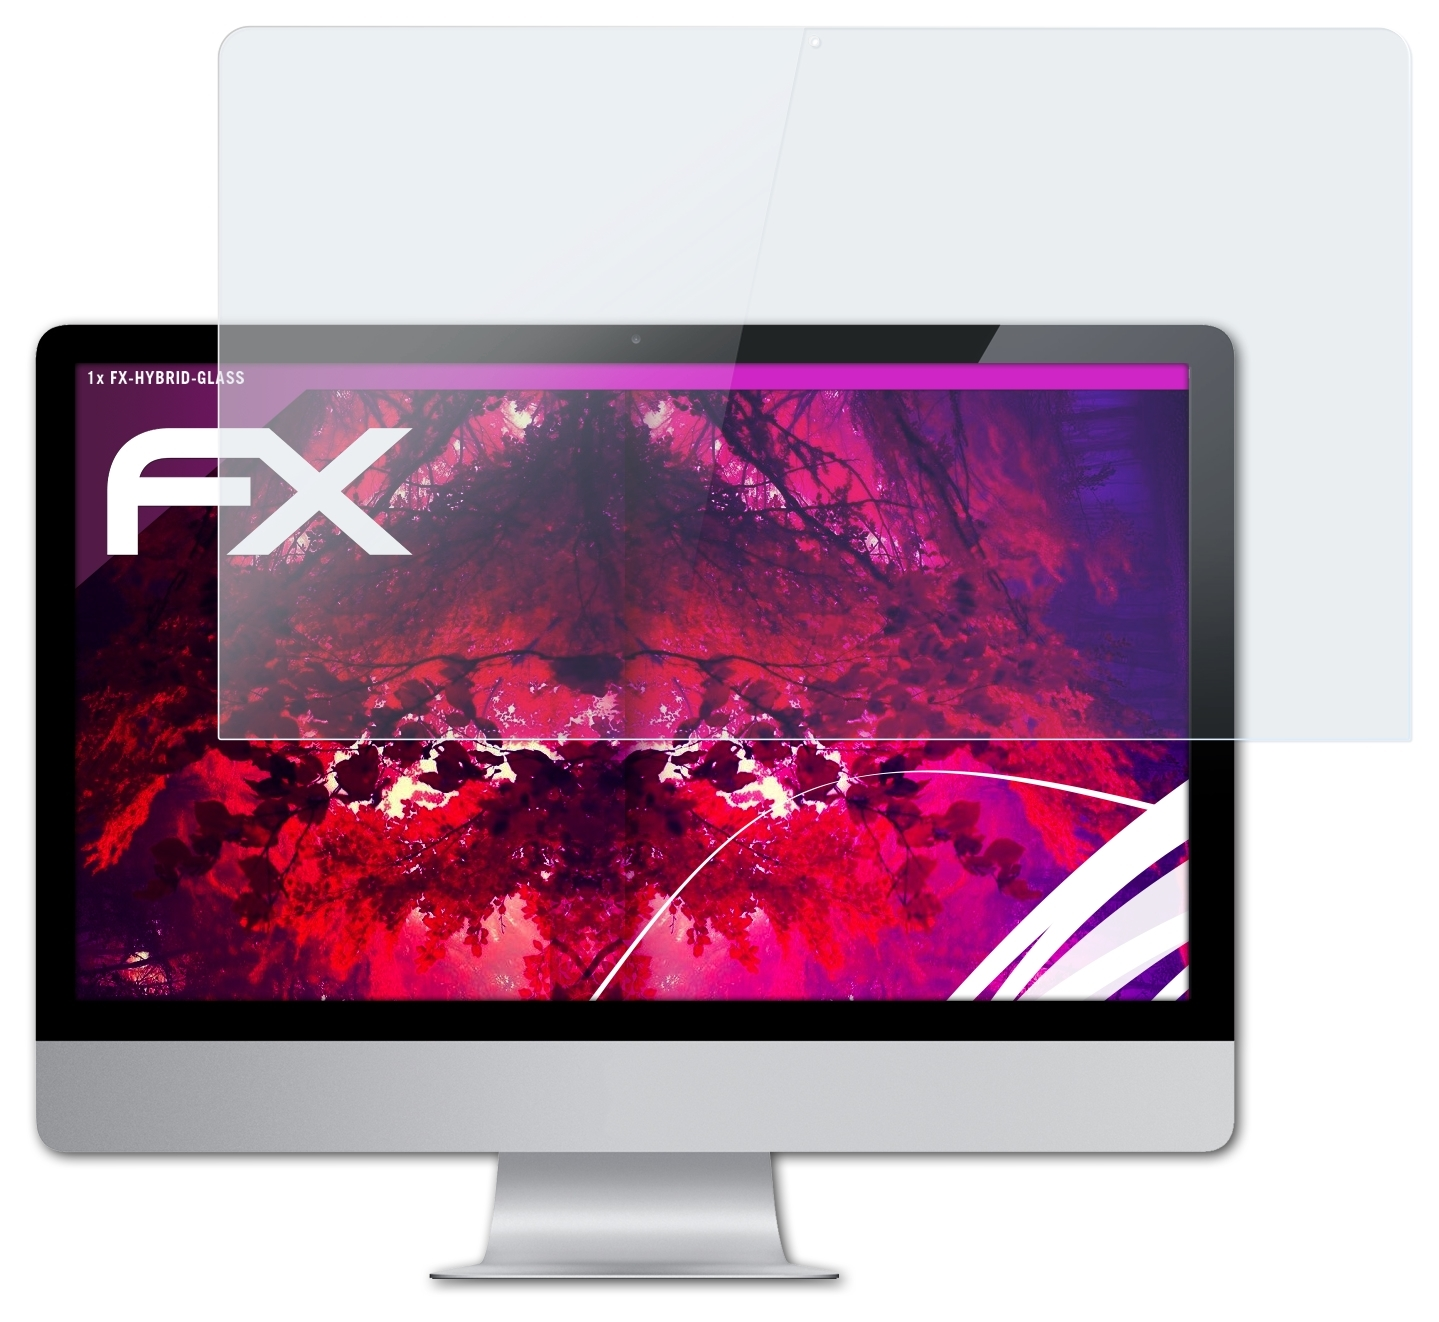 2009-2011)) FX-Hybrid-Glass 27 iMac Schutzglas(für (Model Apple ATFOLIX 6G